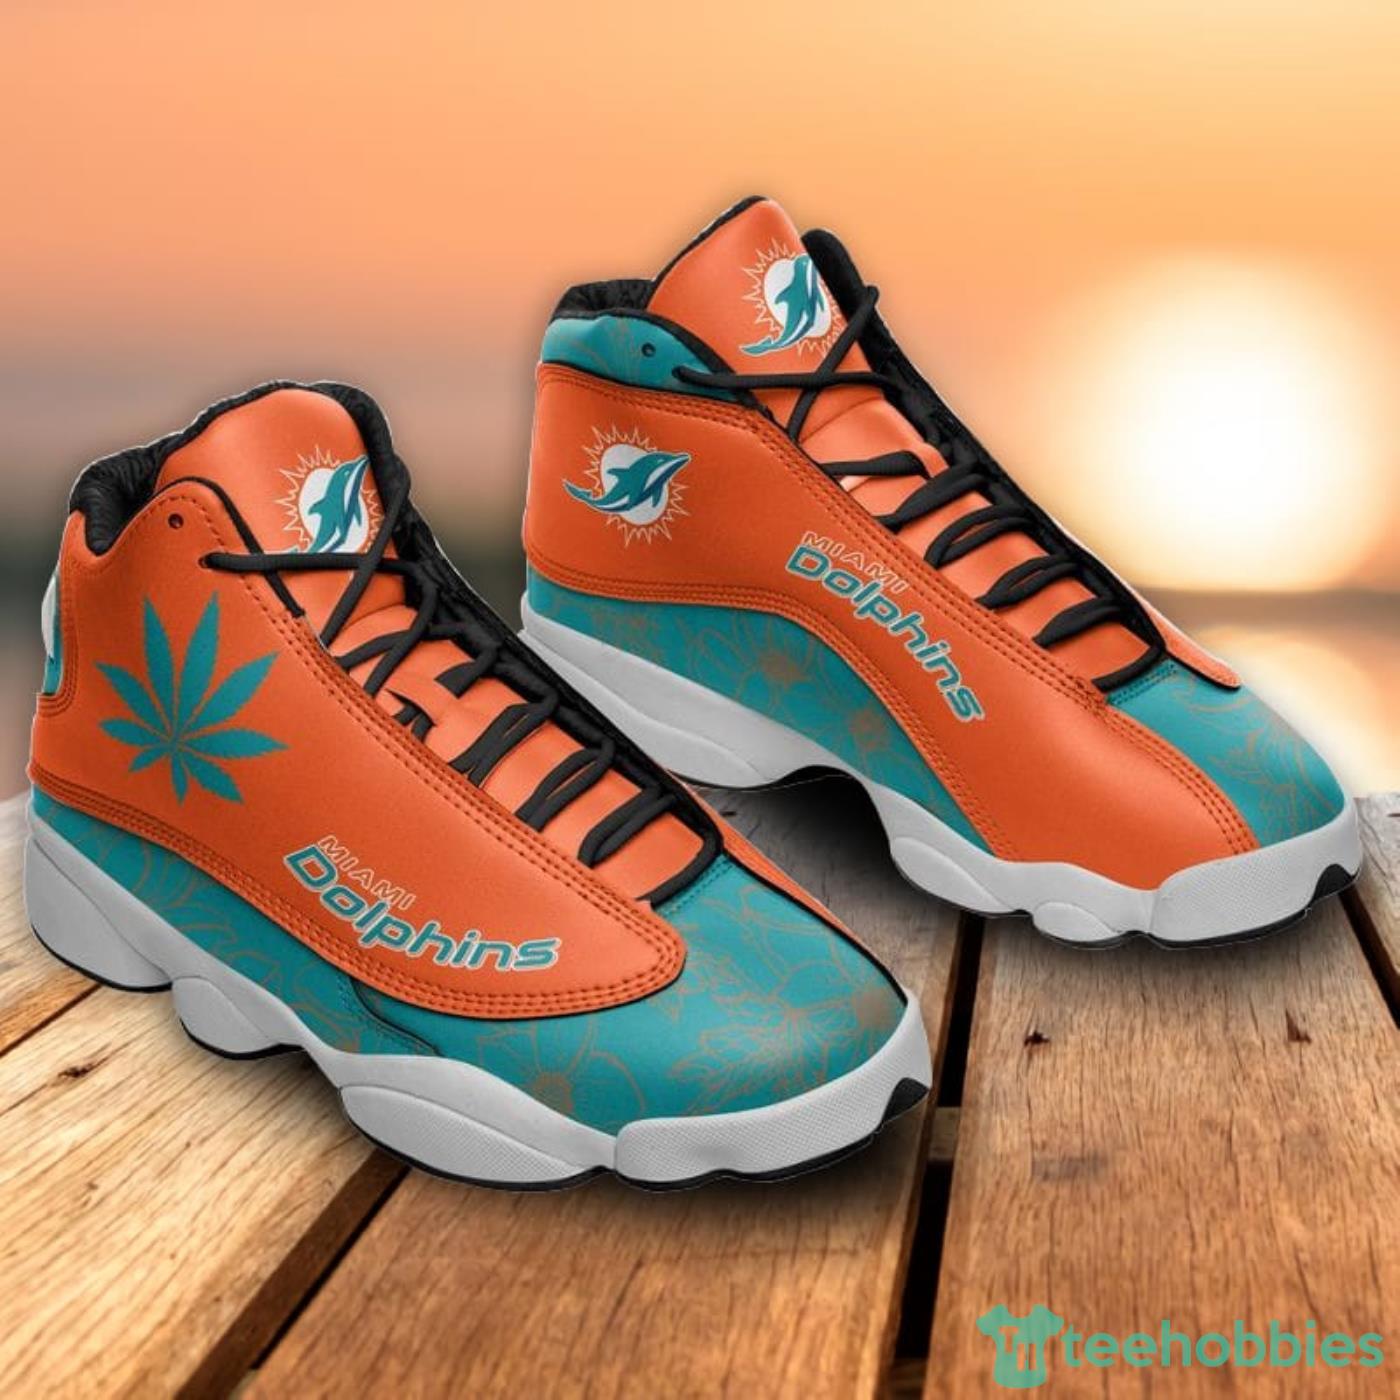 Miami Dolphins Air Jordan 13 Sneakers Nfl Custom Sport Shoes